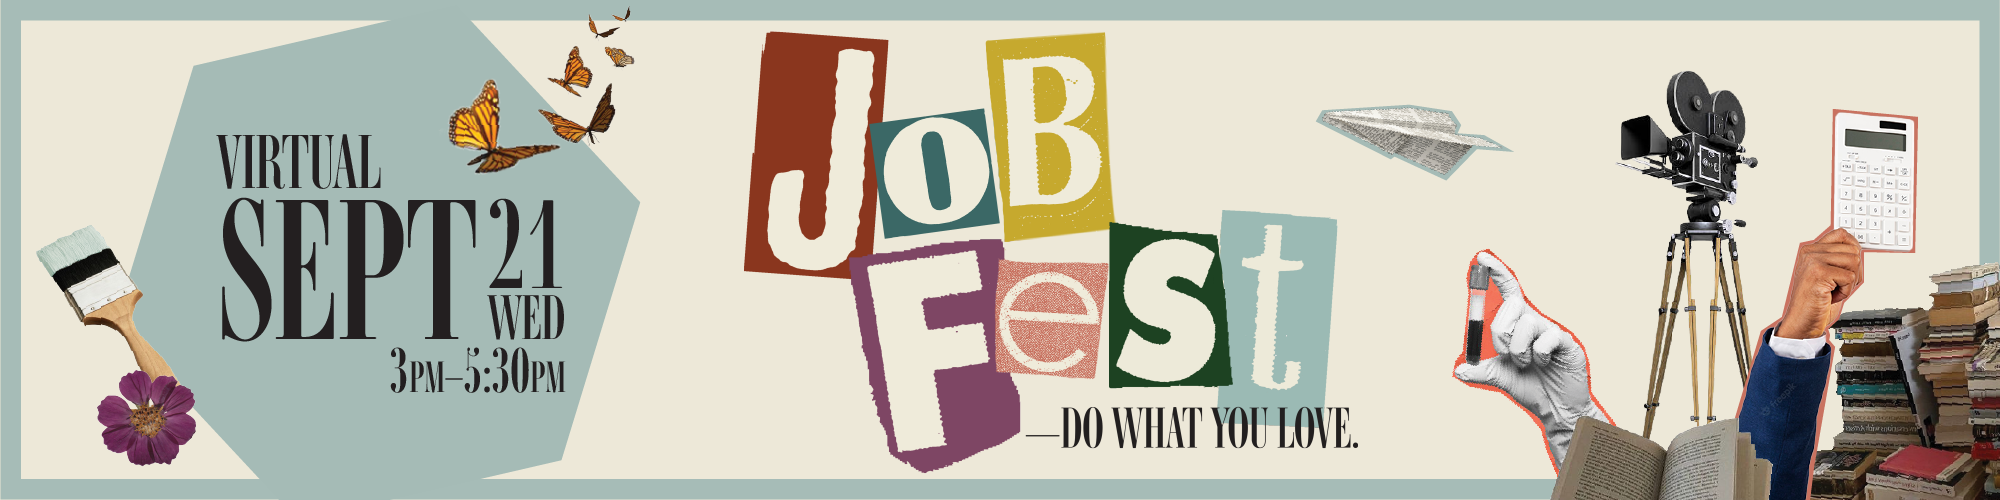 Job Fest: Do What You Love - September 21, Virtual Fair, 3 pm - 5:30 pm on Handshake.